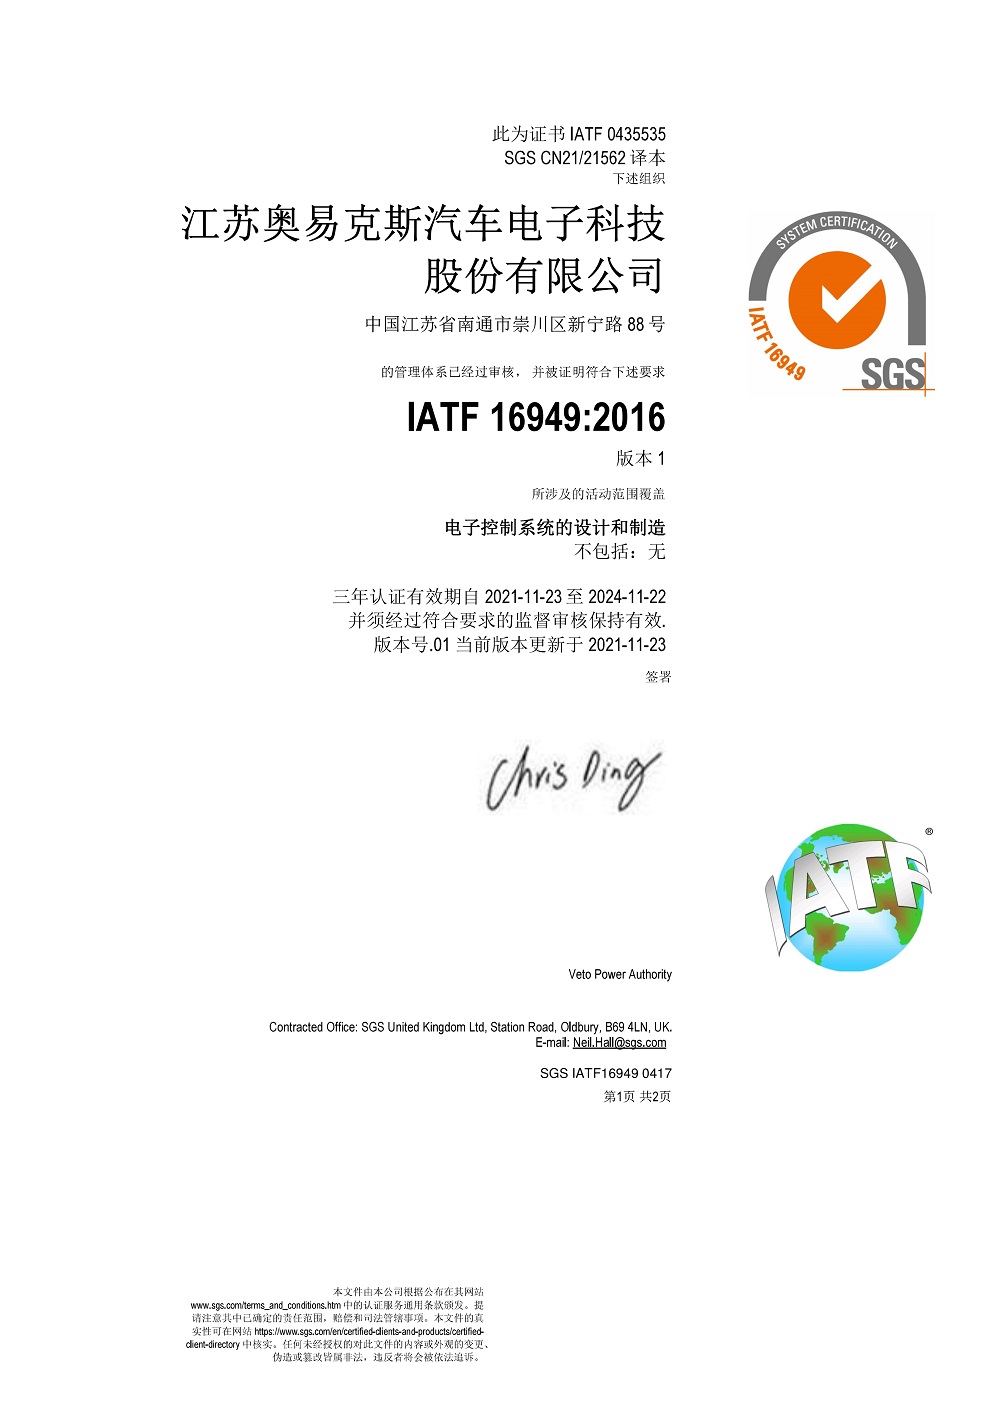 AECS-IATF16949 Quality Management System Certification of 2021